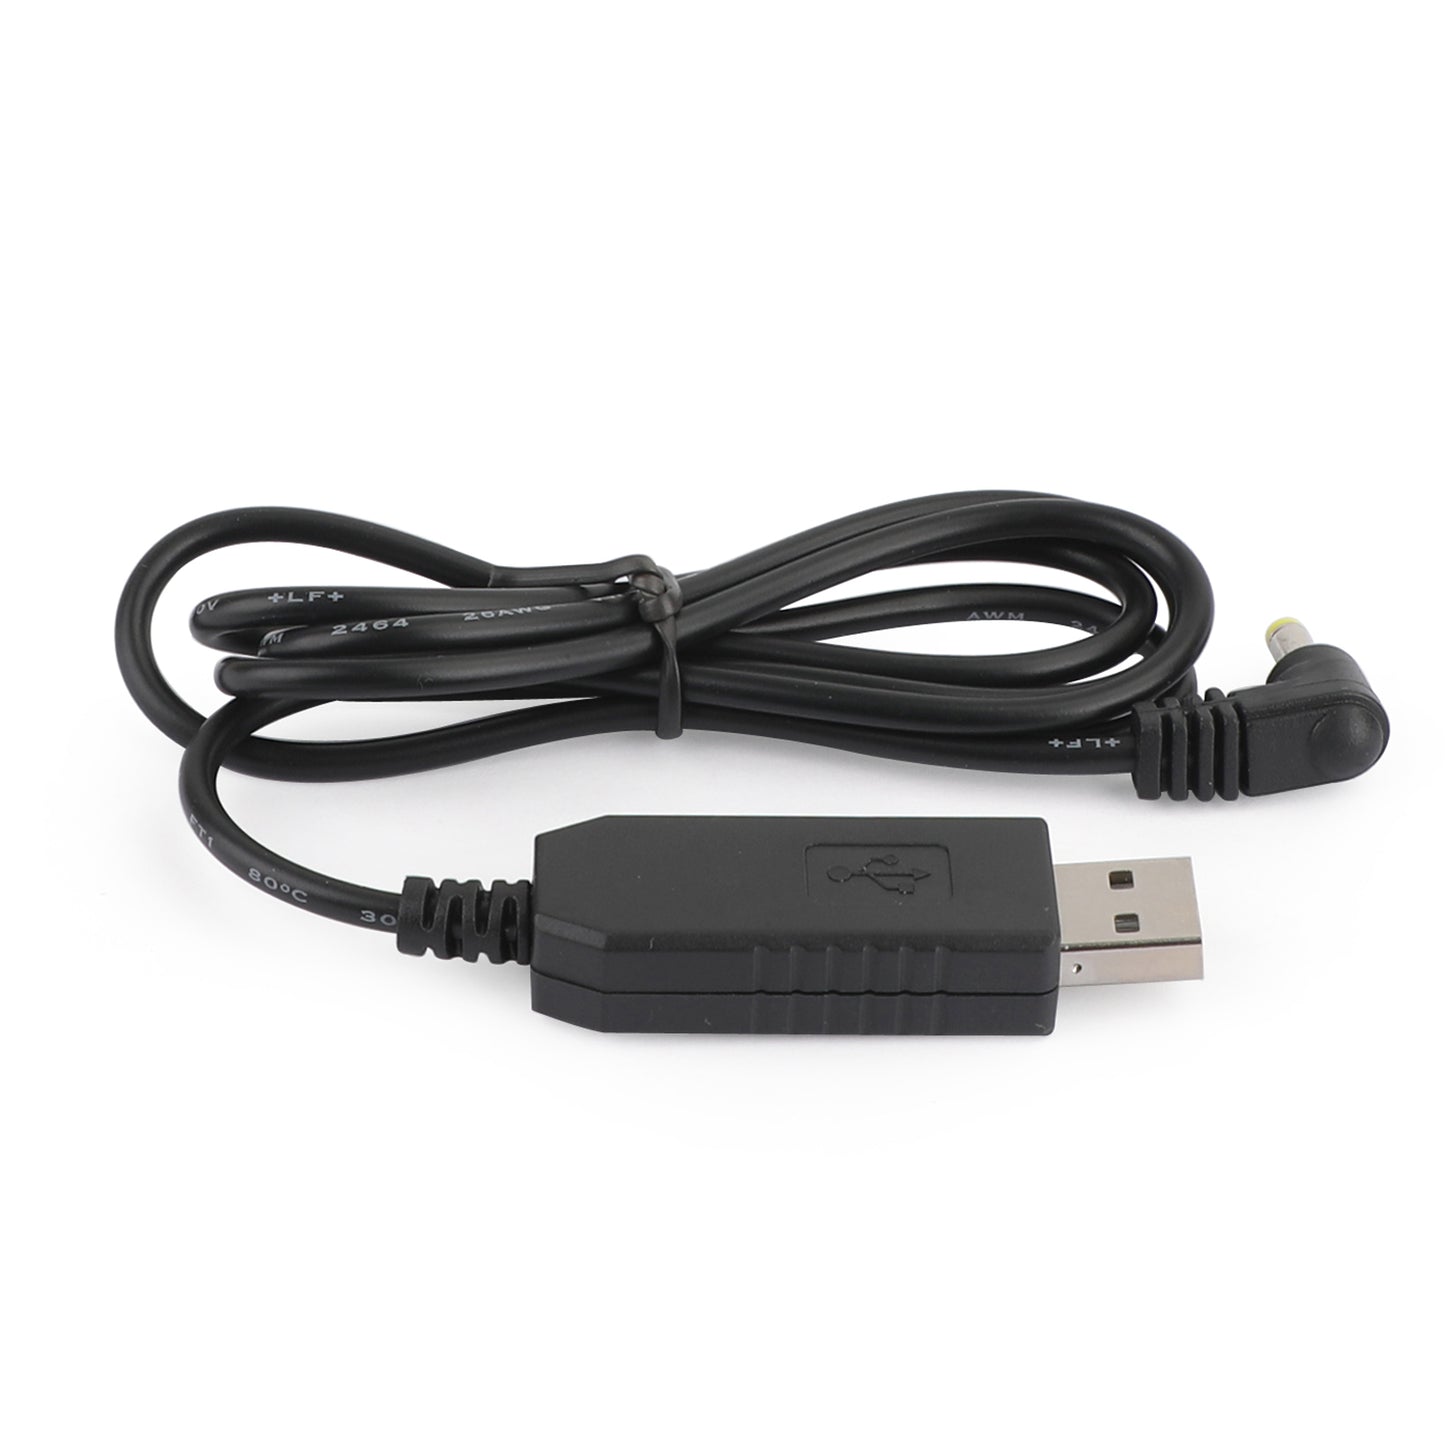 Walkie-talkie USB Charger Kabel für BaoFeng UV5RE UV-5R